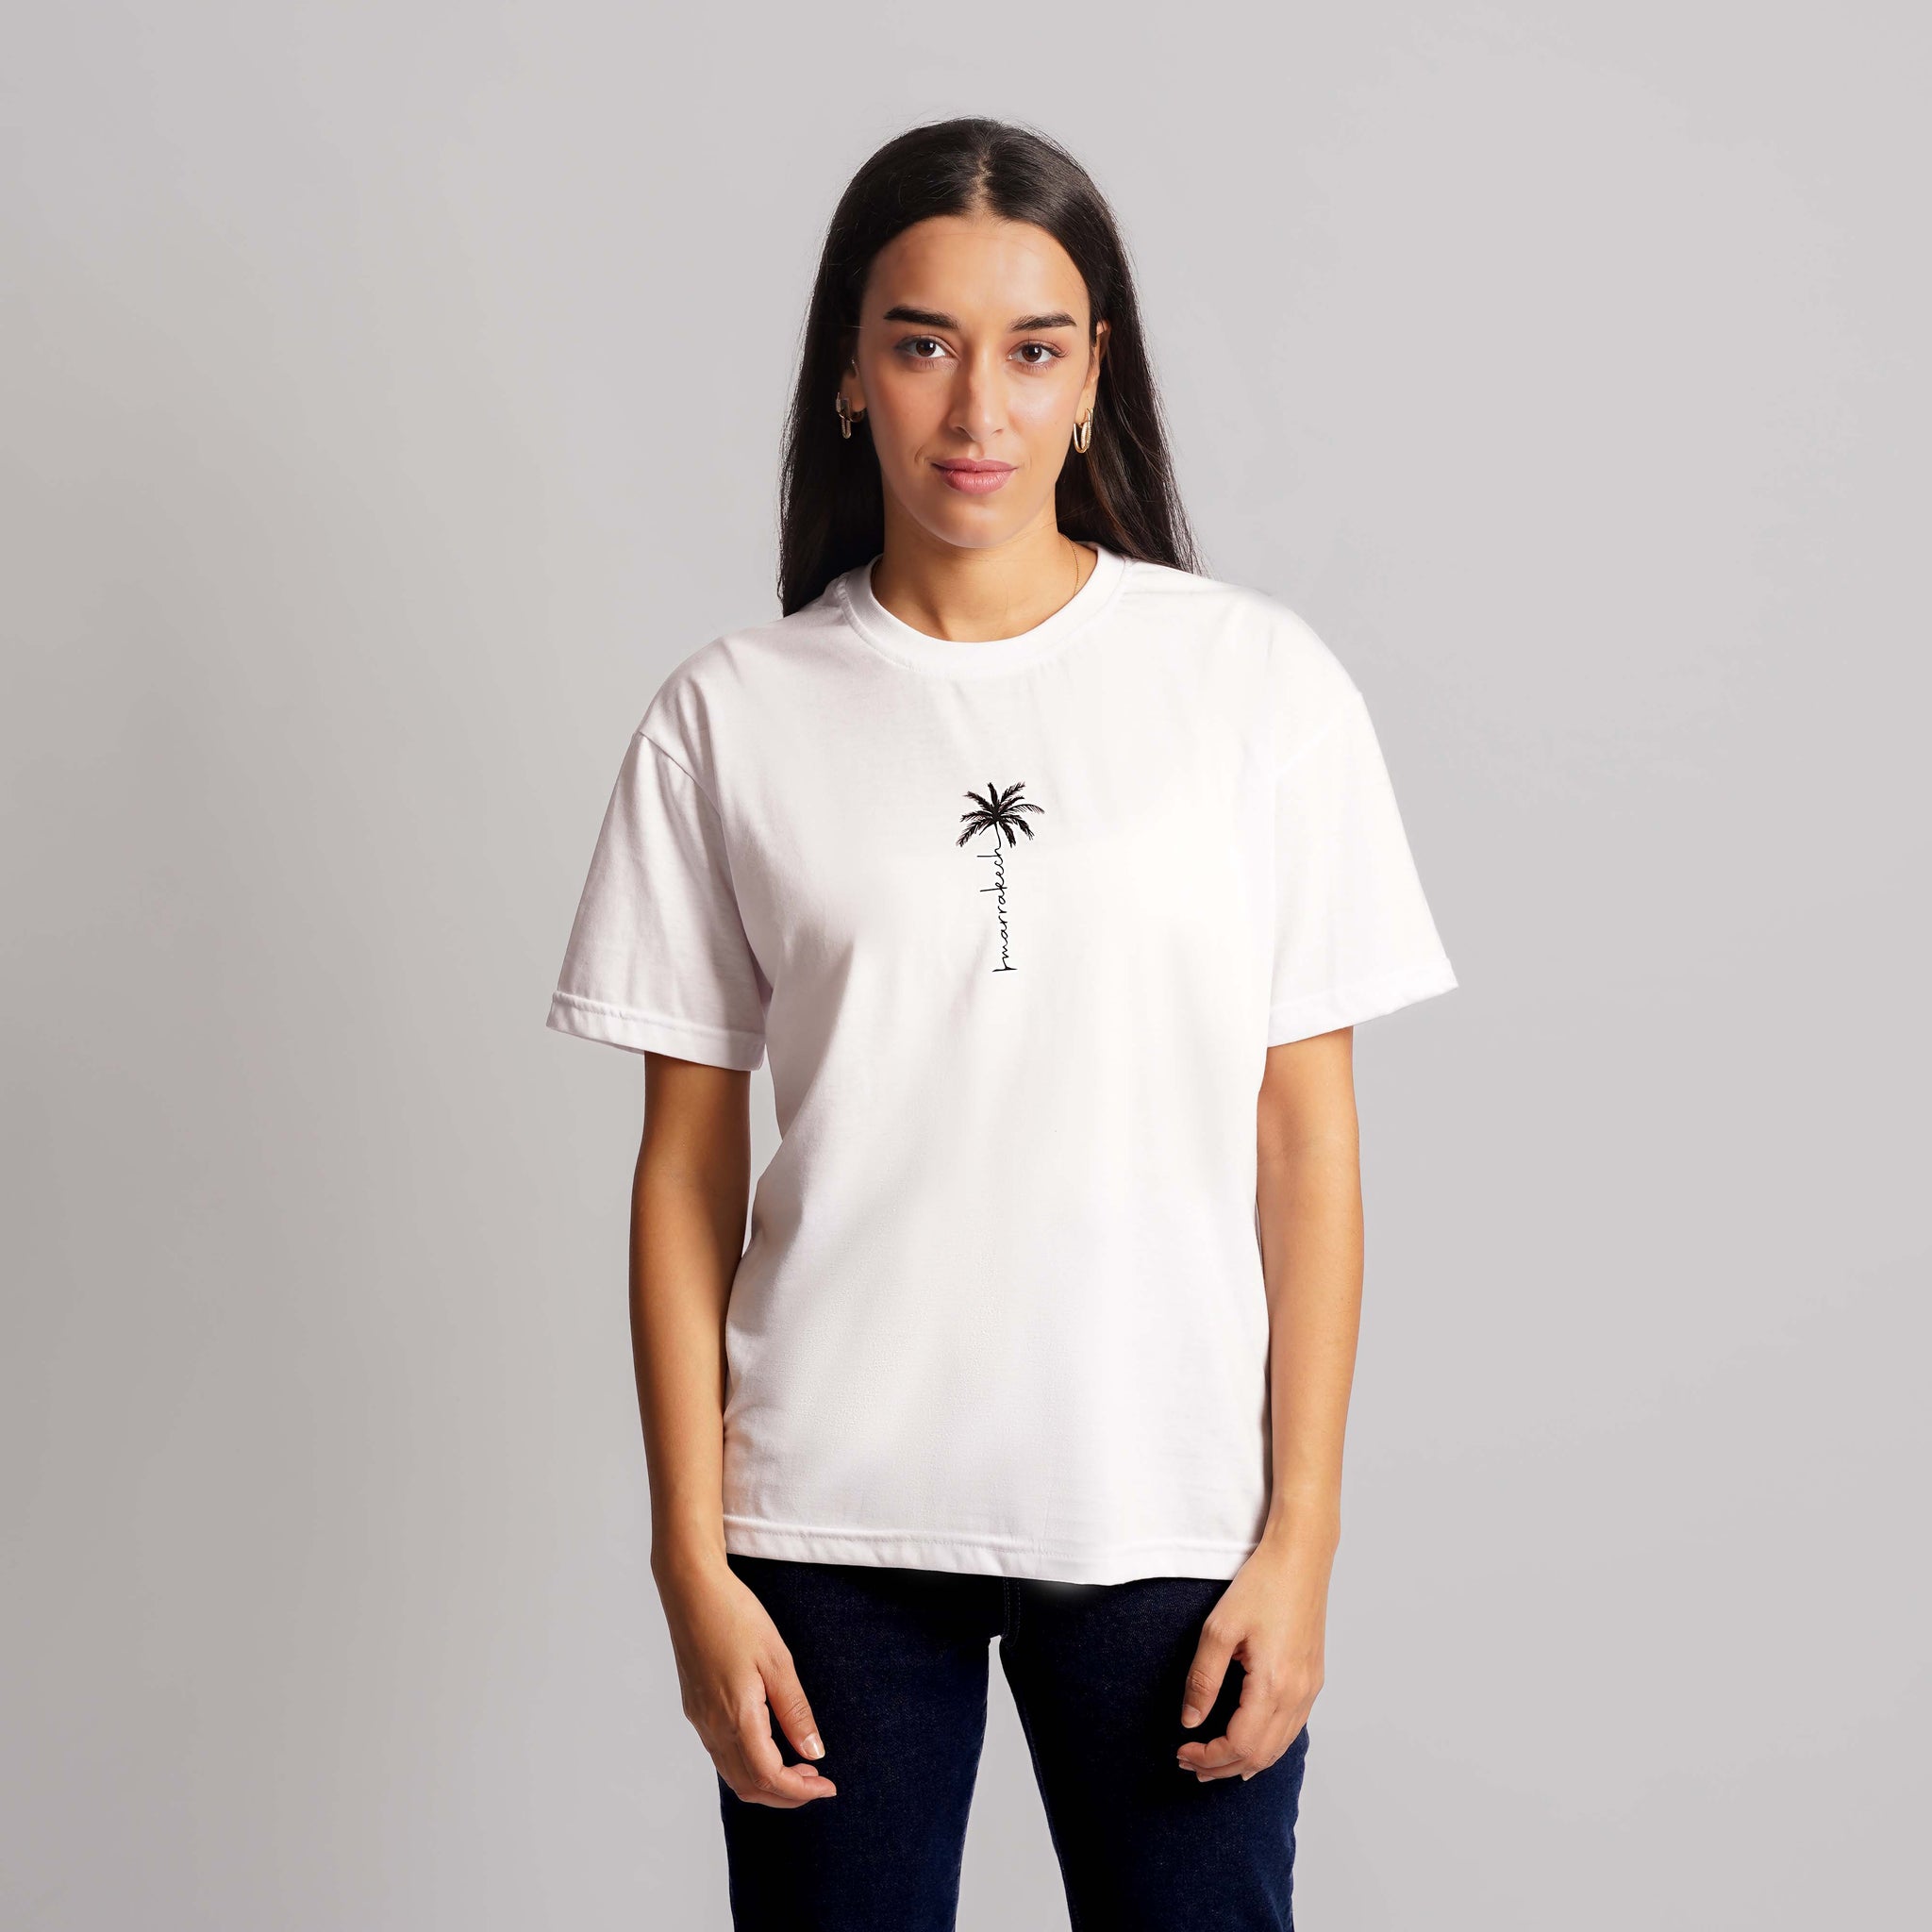 Marrakech Palm T-Shirt Black print Women